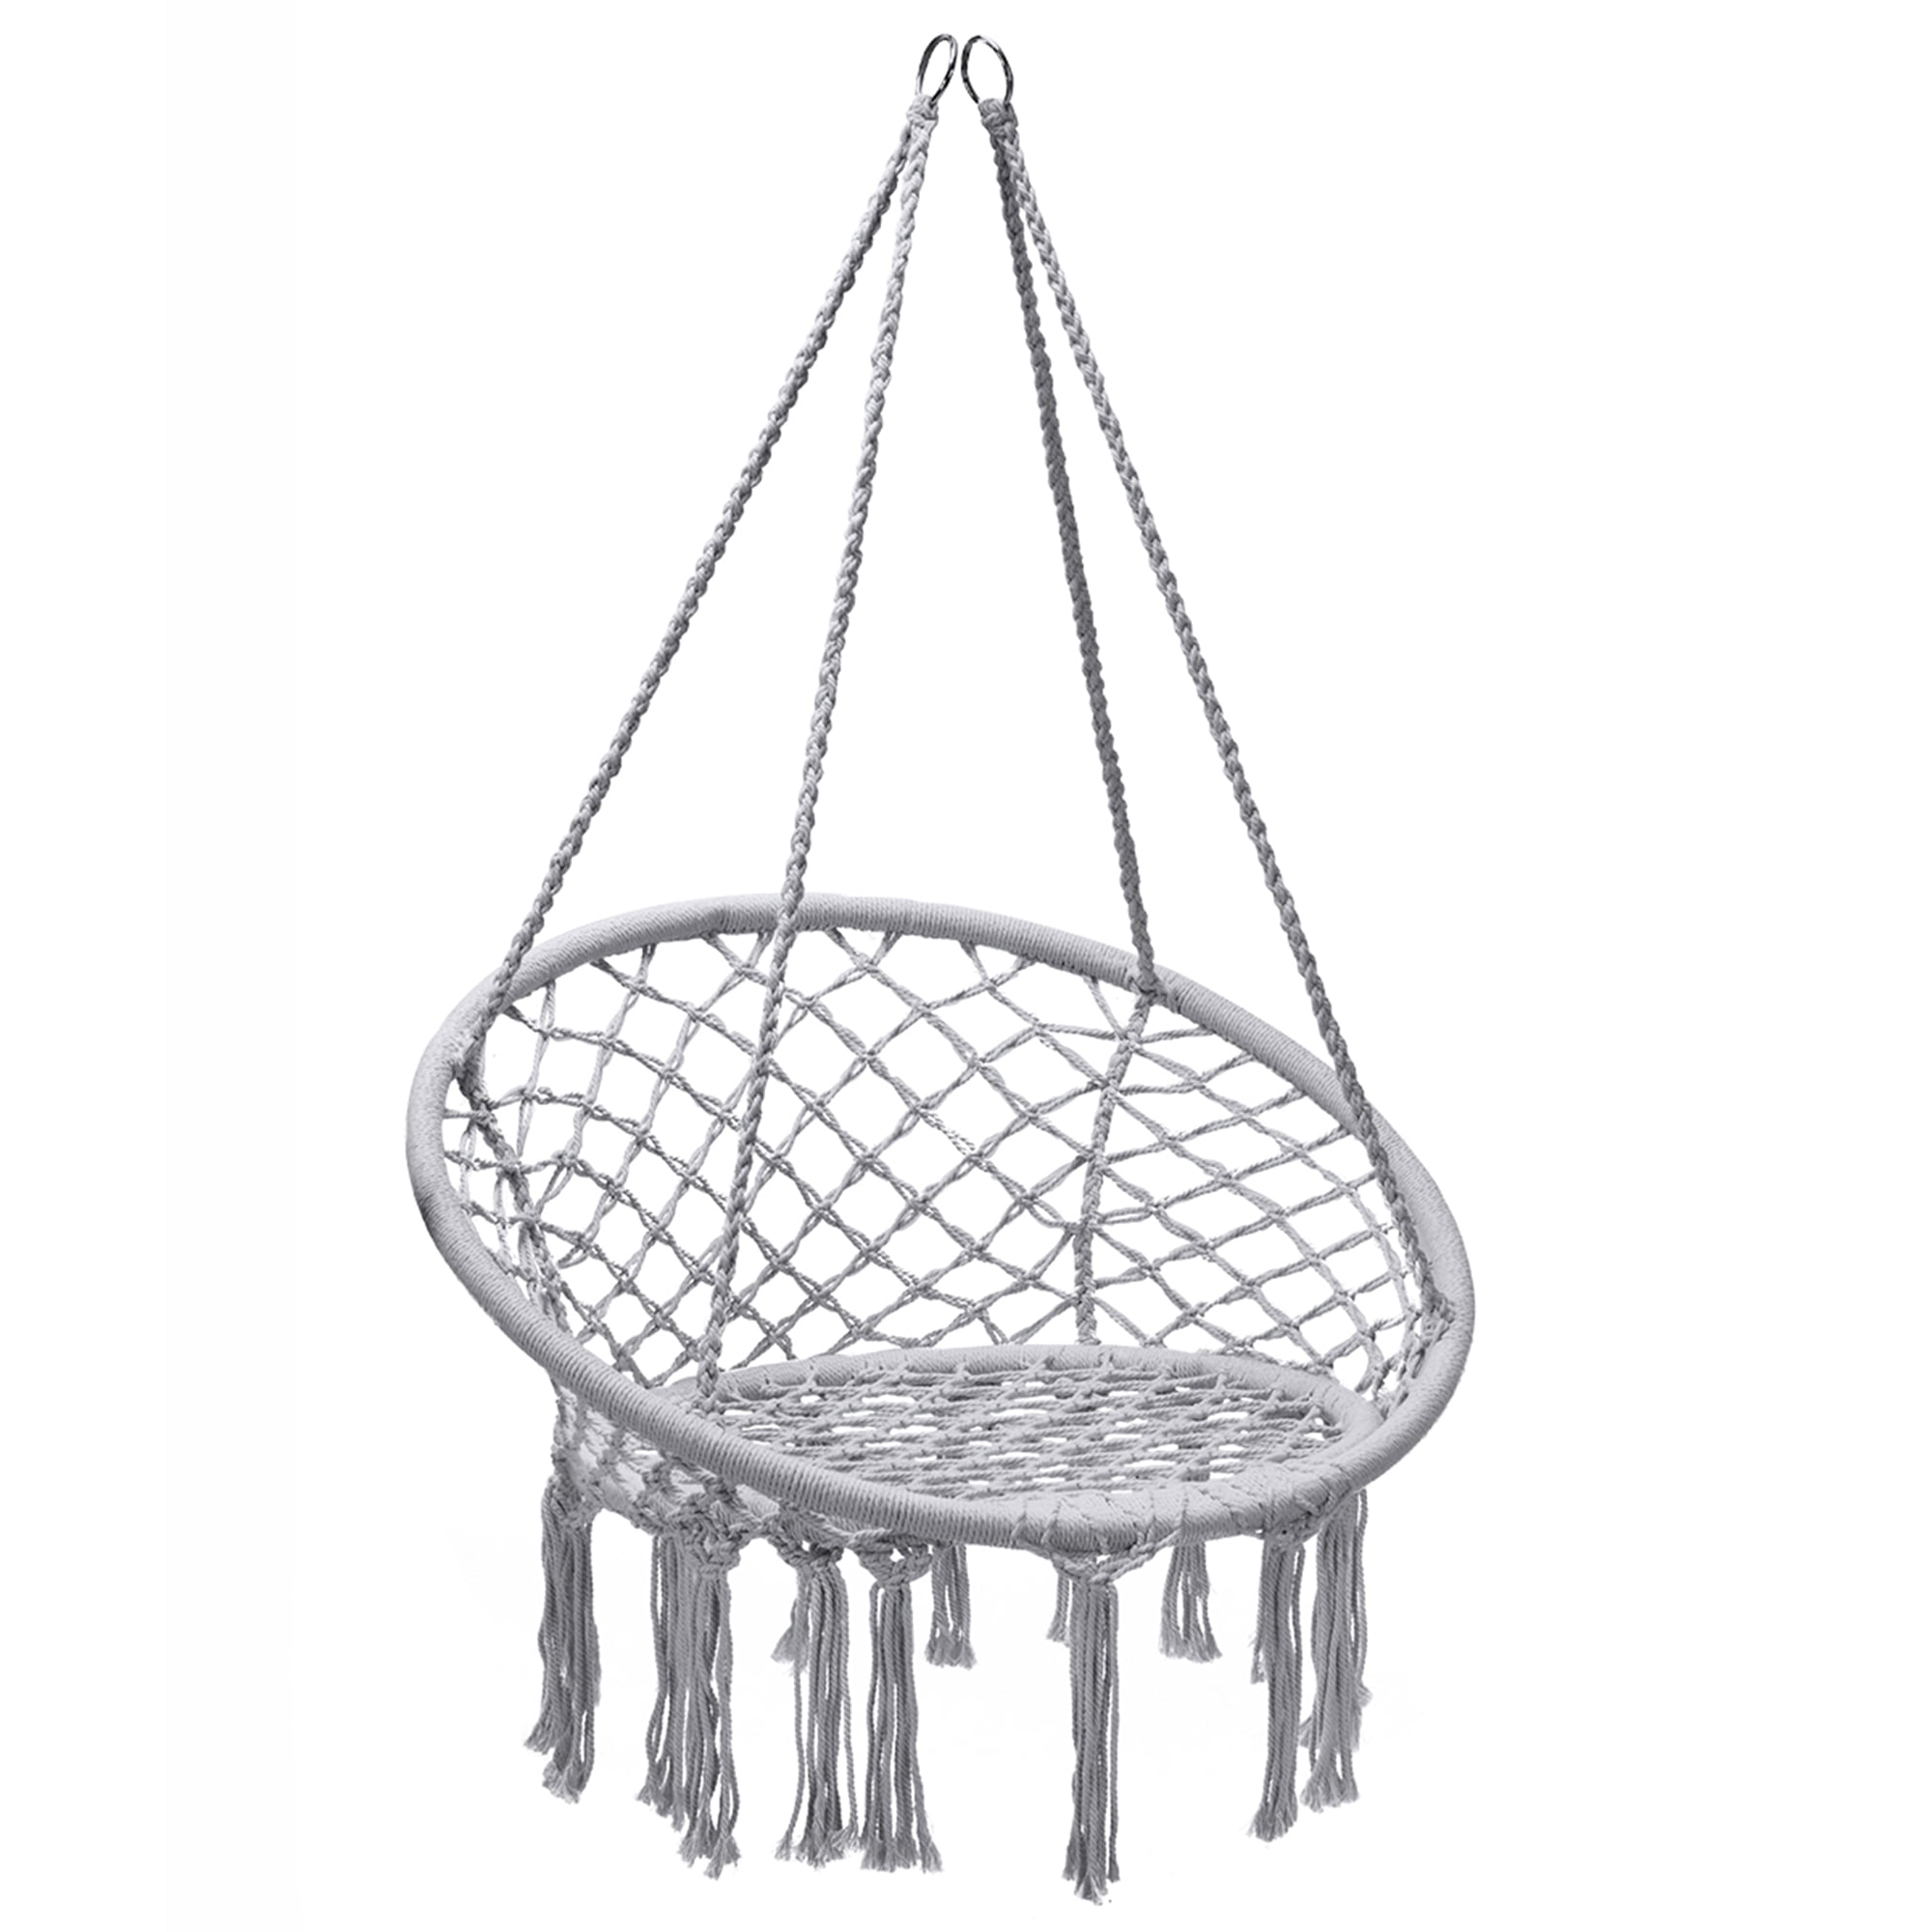 Hammock Chair Swing Hanging Rope Seat Net Chair Tree Outdoor Porch Patio Indoor 